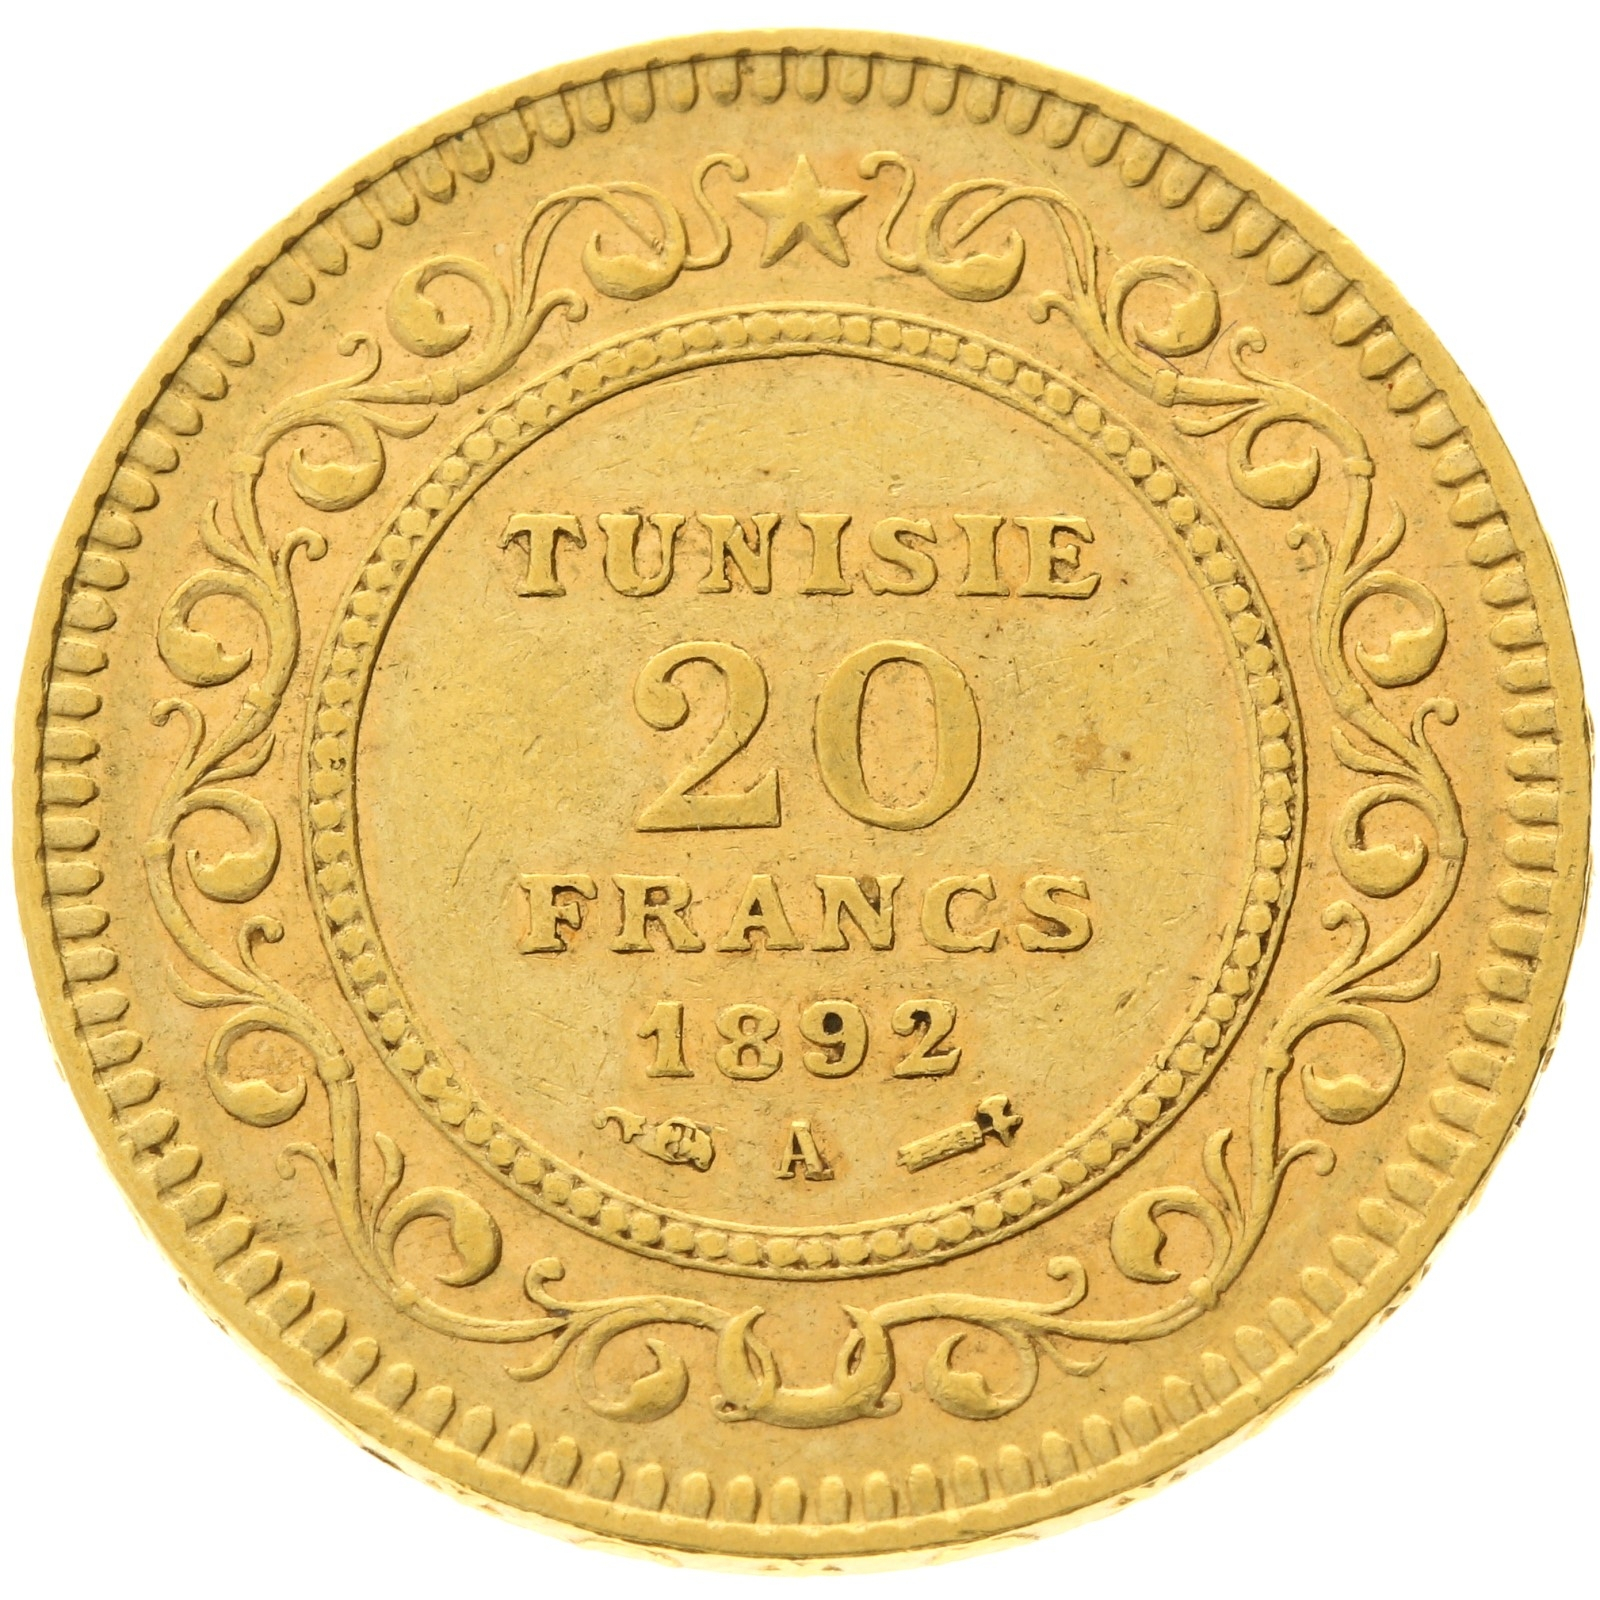 Tunisia - 20 francs - 1892 - A - Ali Bey